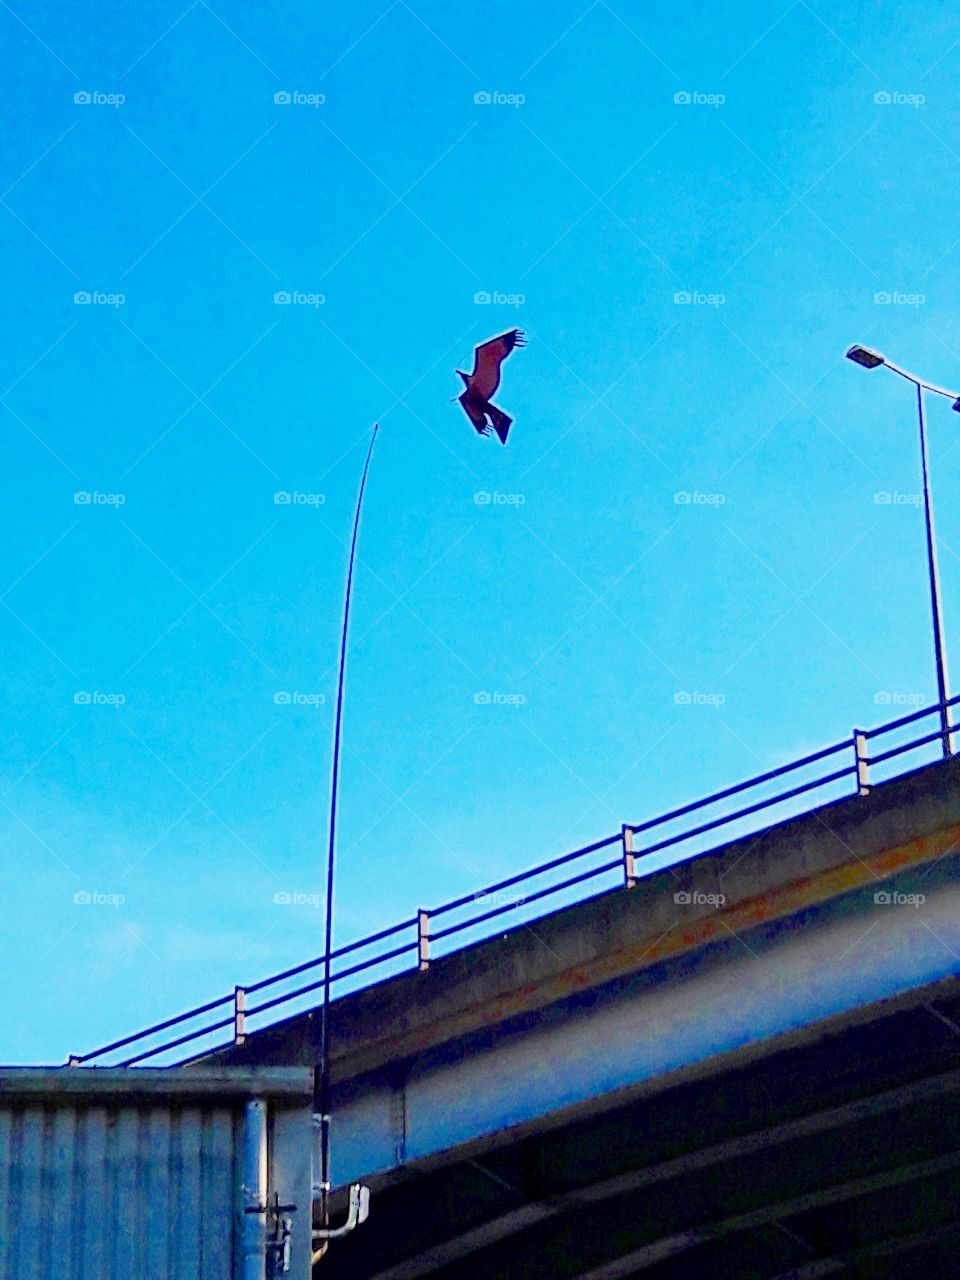 A Kite Flying High